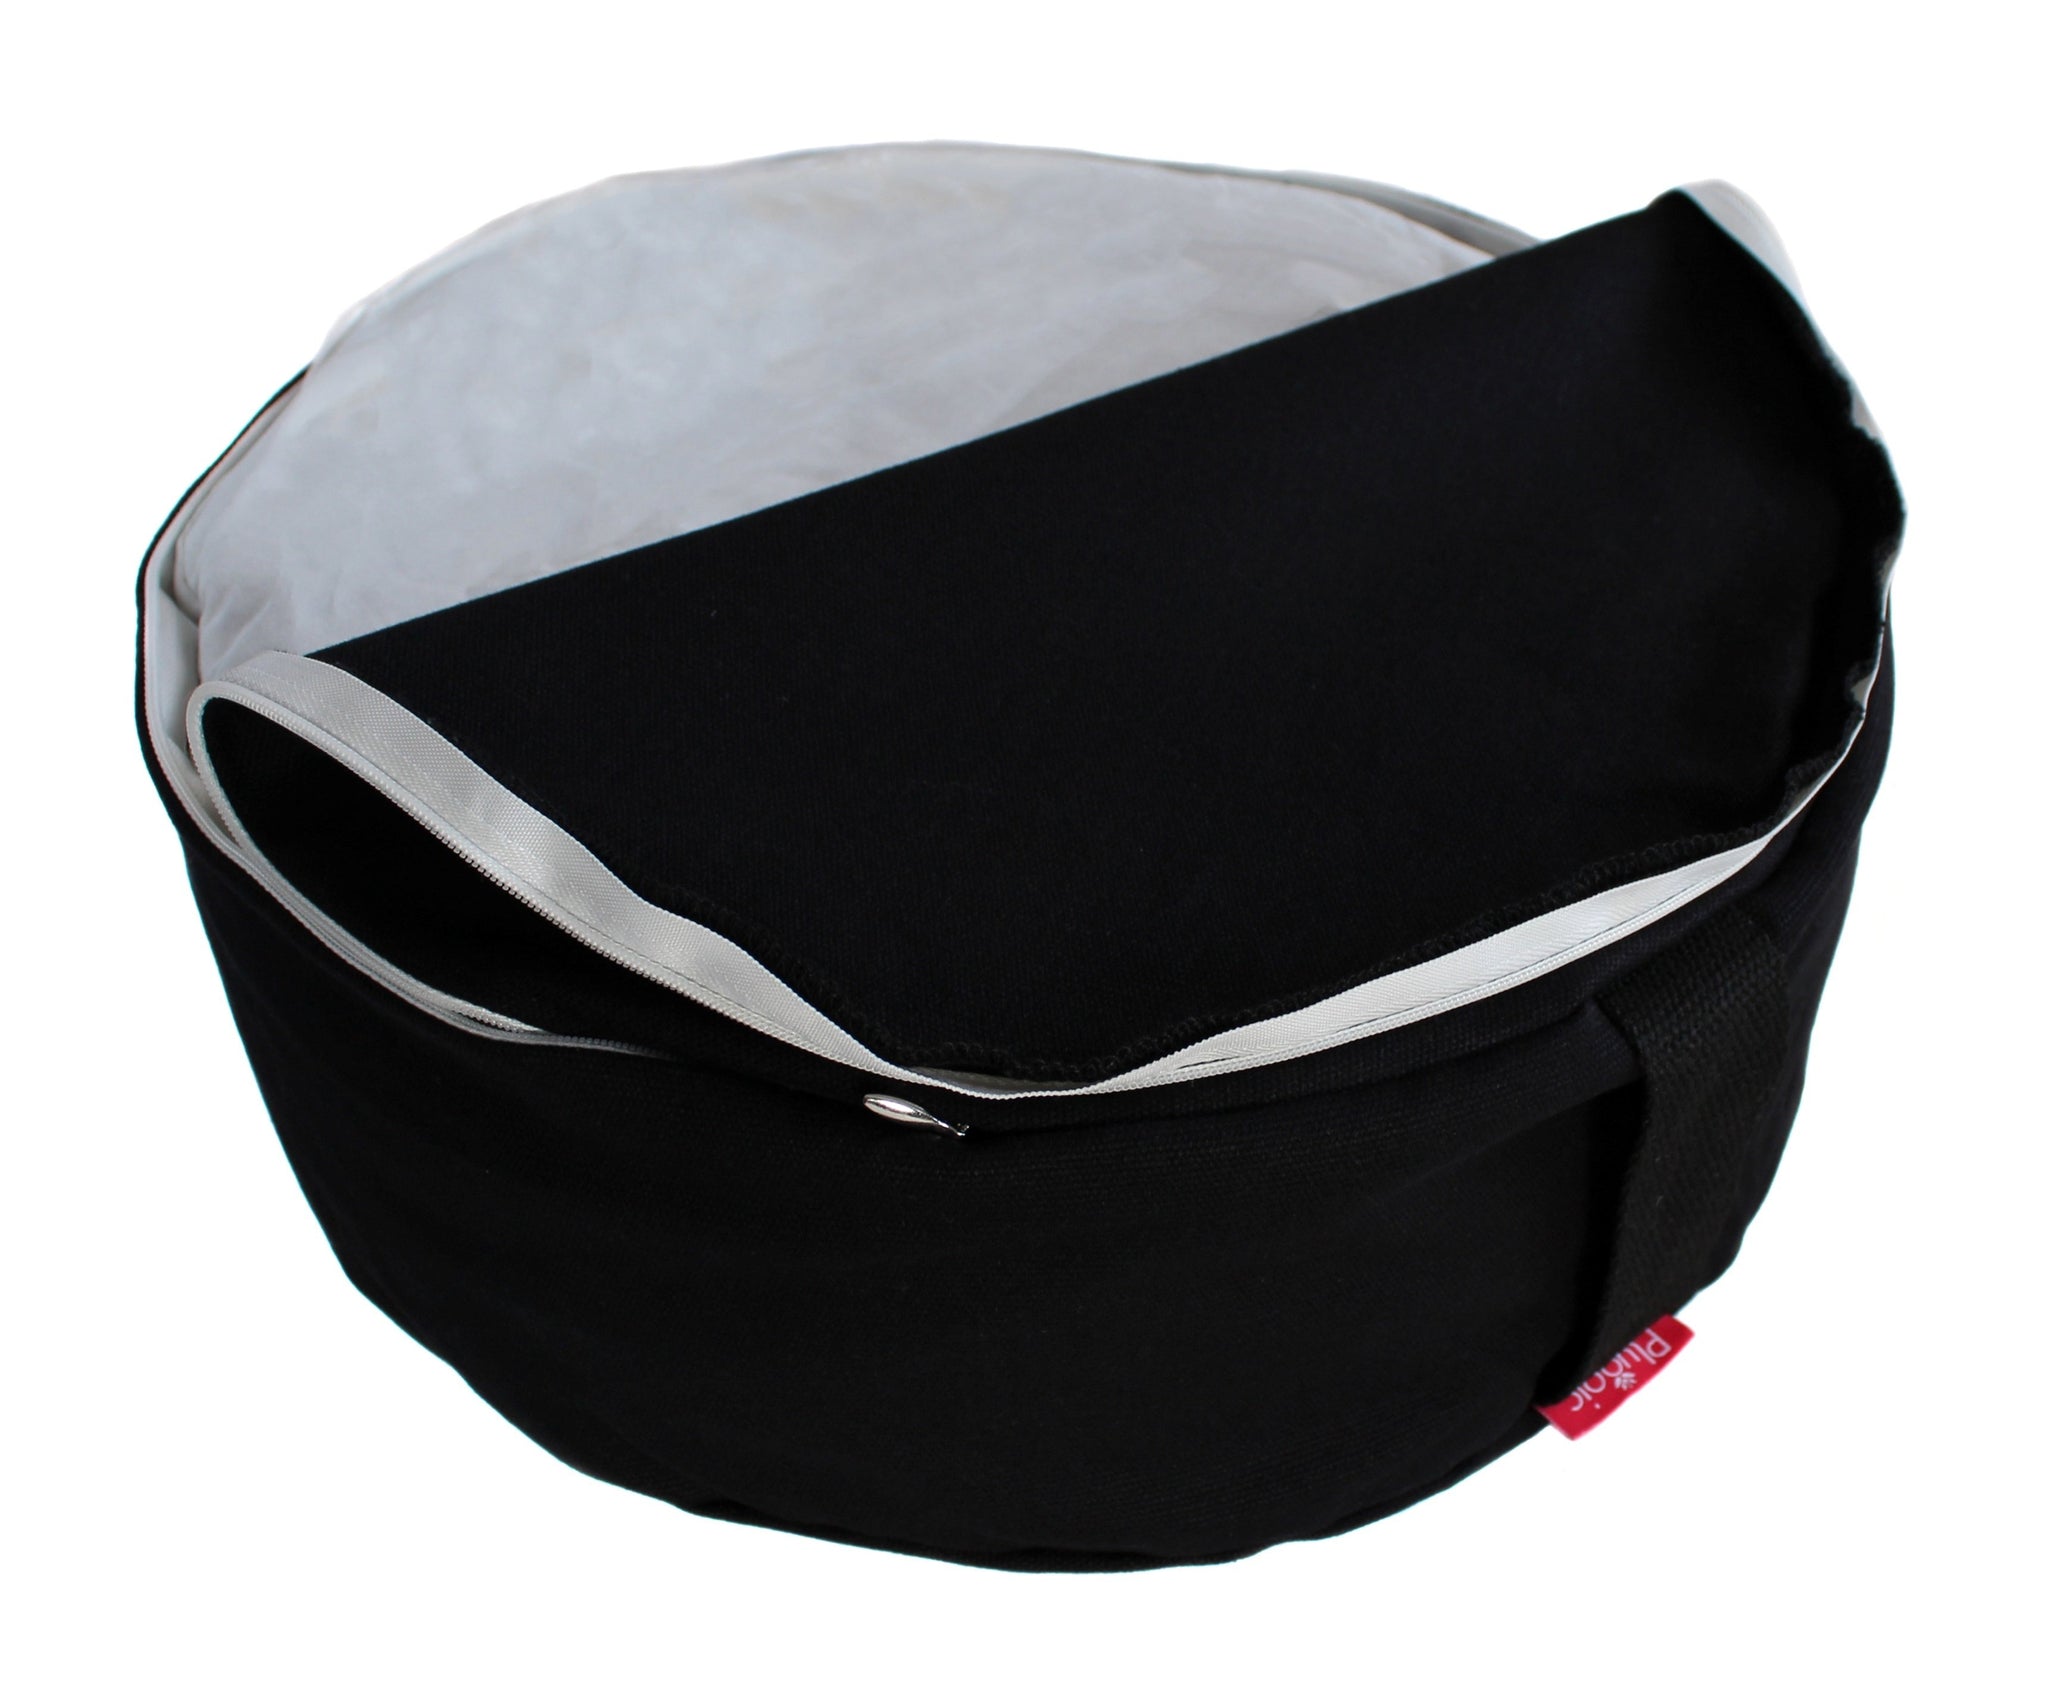 Plyopic-Zafu Meditation Cushion (Black)-Meditation Cushion With Removable Washable Cover